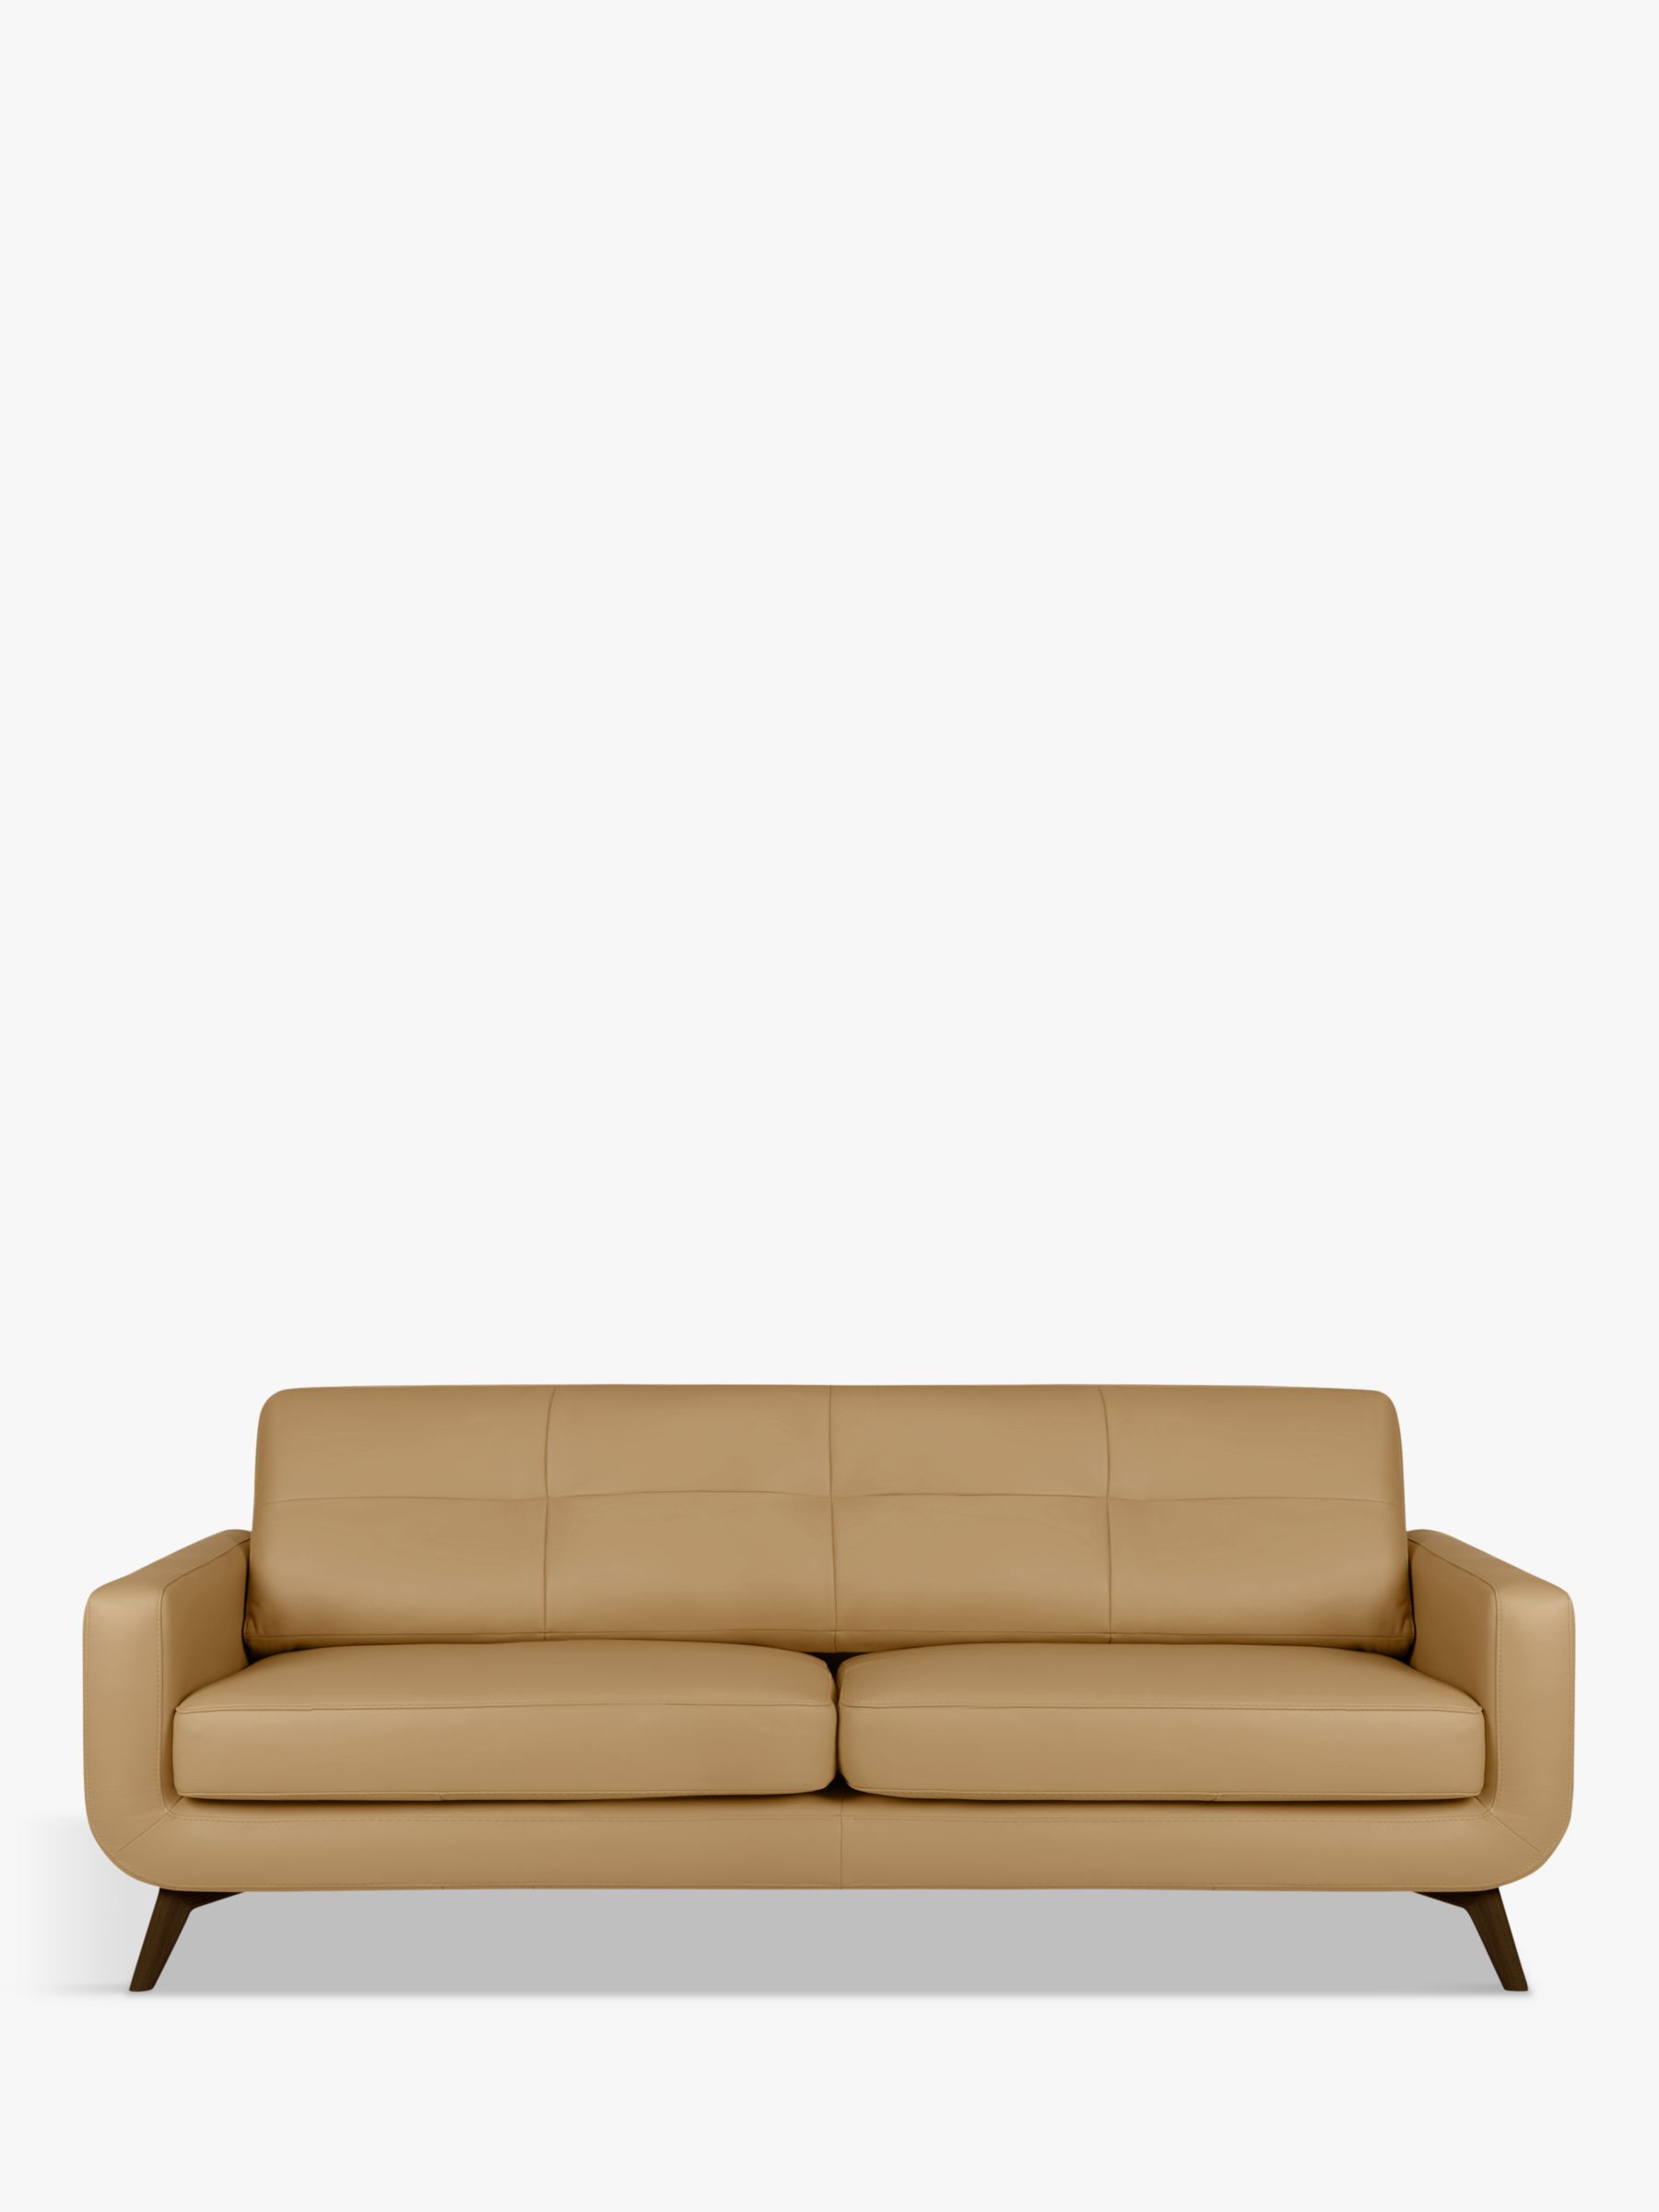 Barbican Range, John Lewis Barbican Grand 4 Seater Leather Sofa, Dark Leg, Sellvagio Parchment